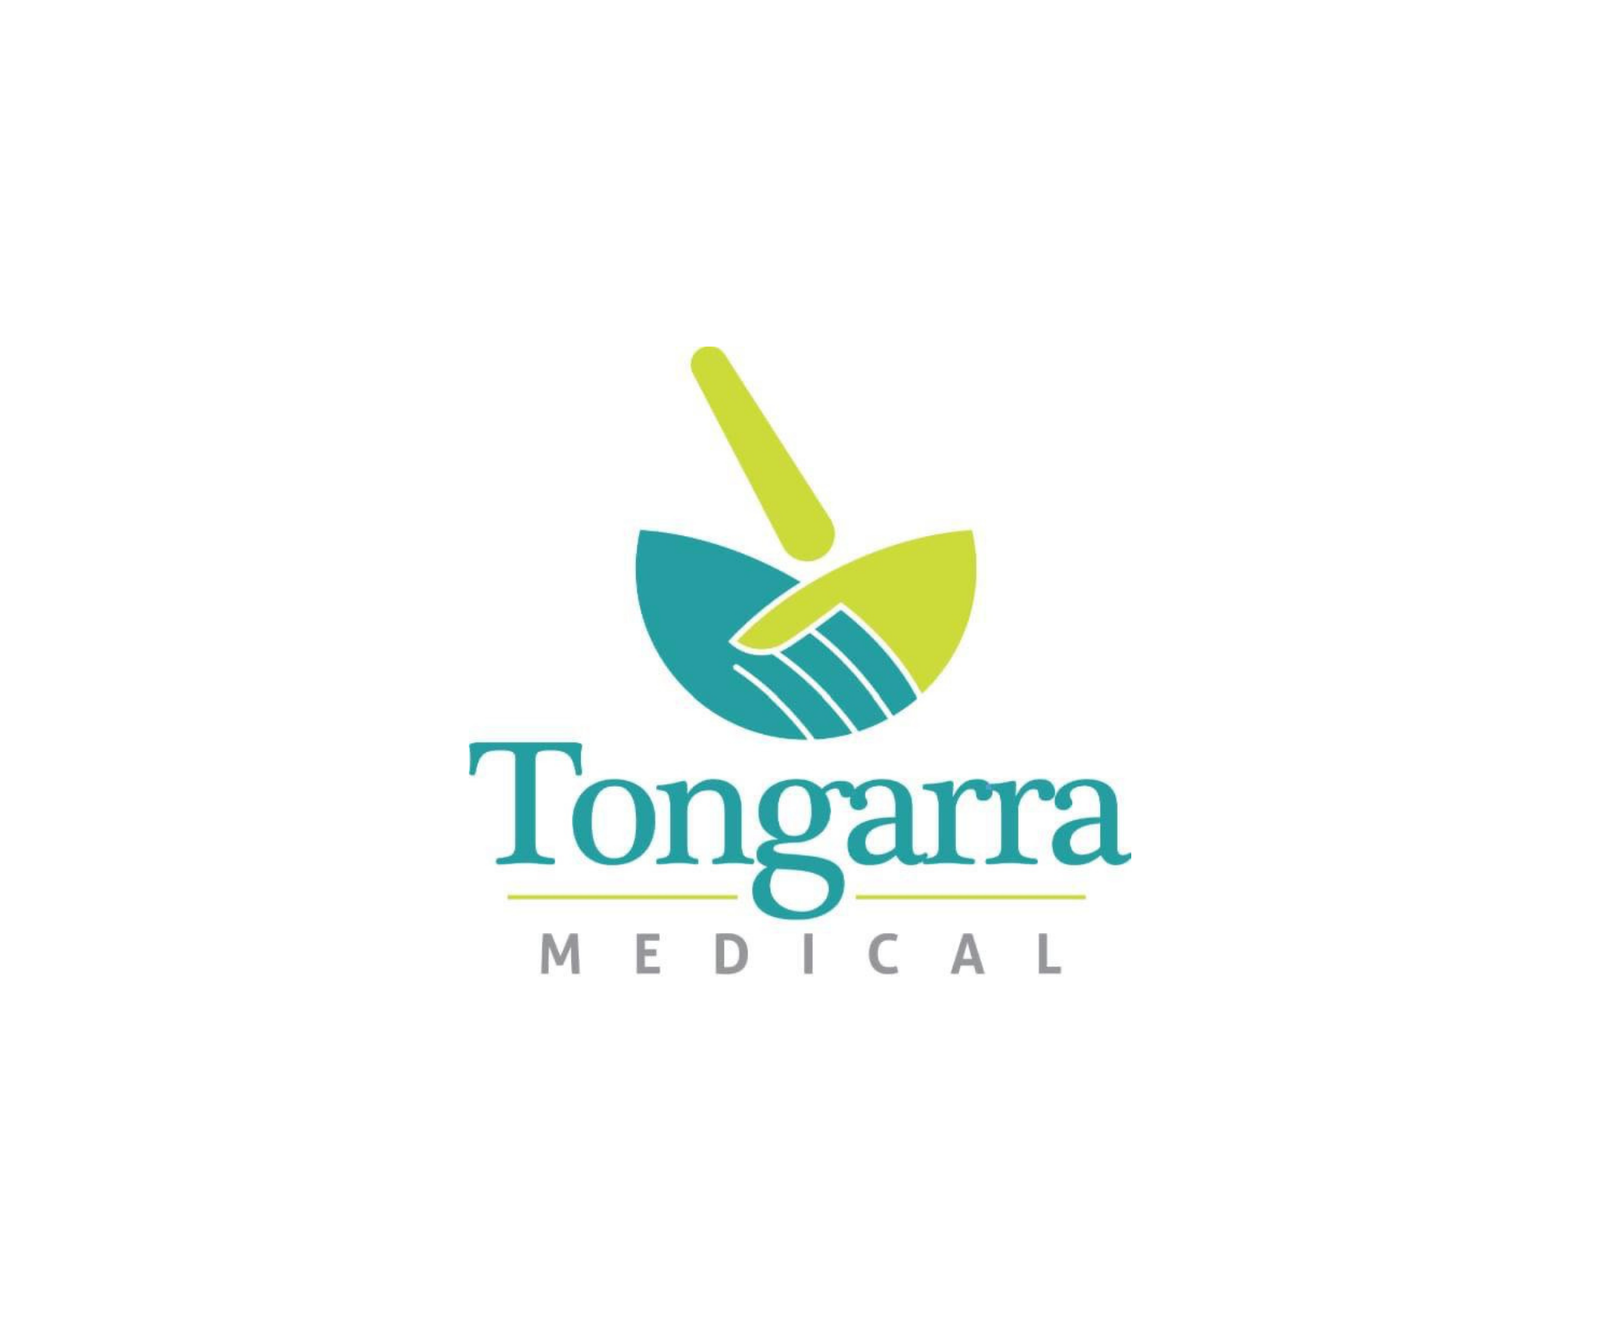 Tongarra medical services